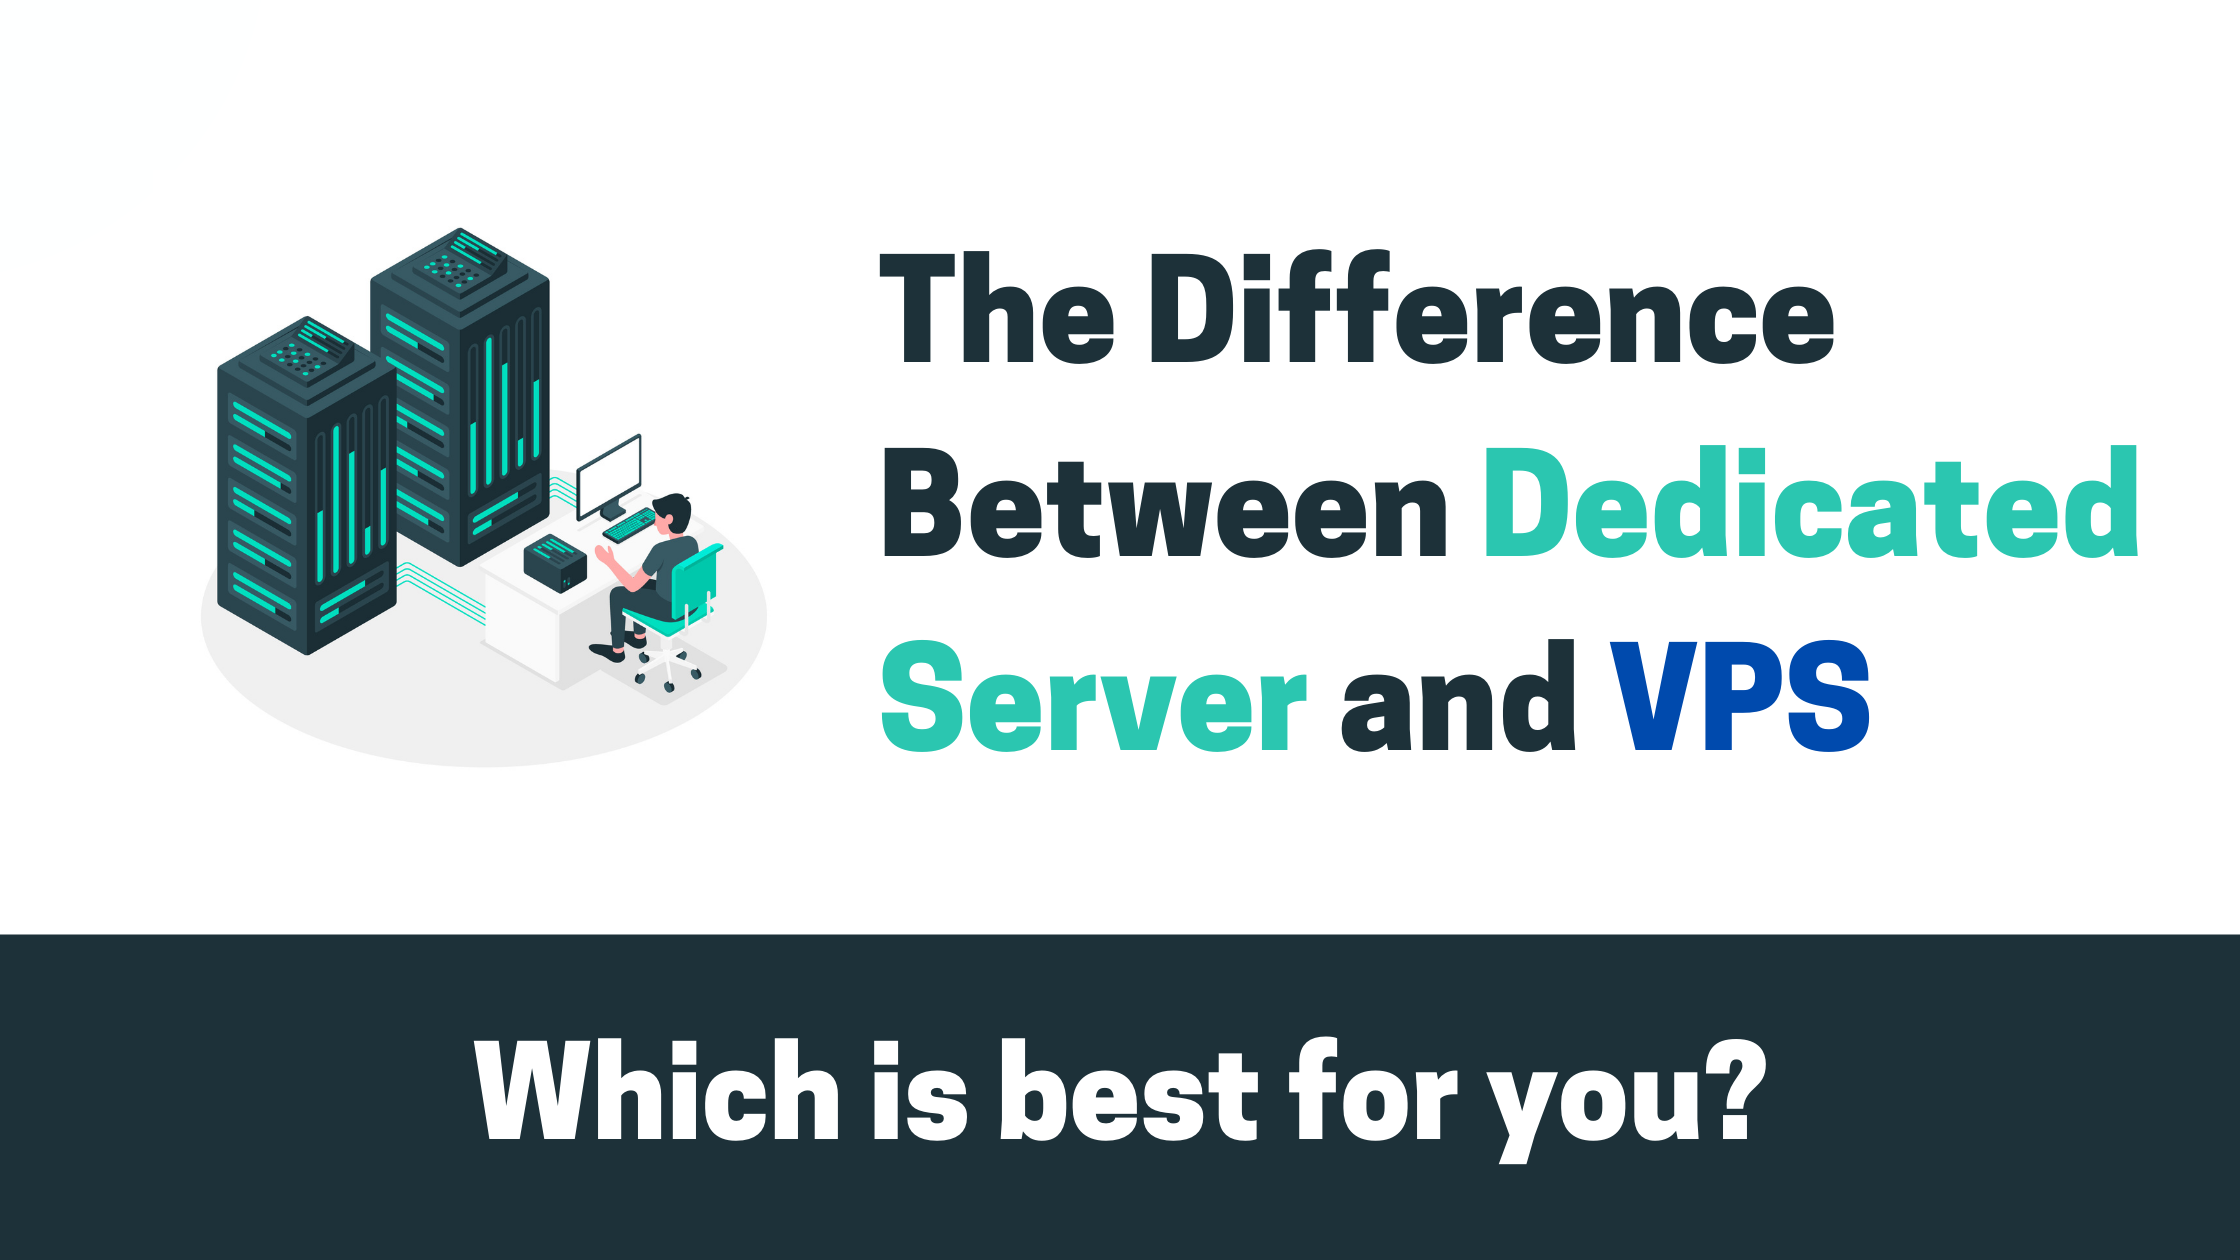 Dedicated Server vs VPS